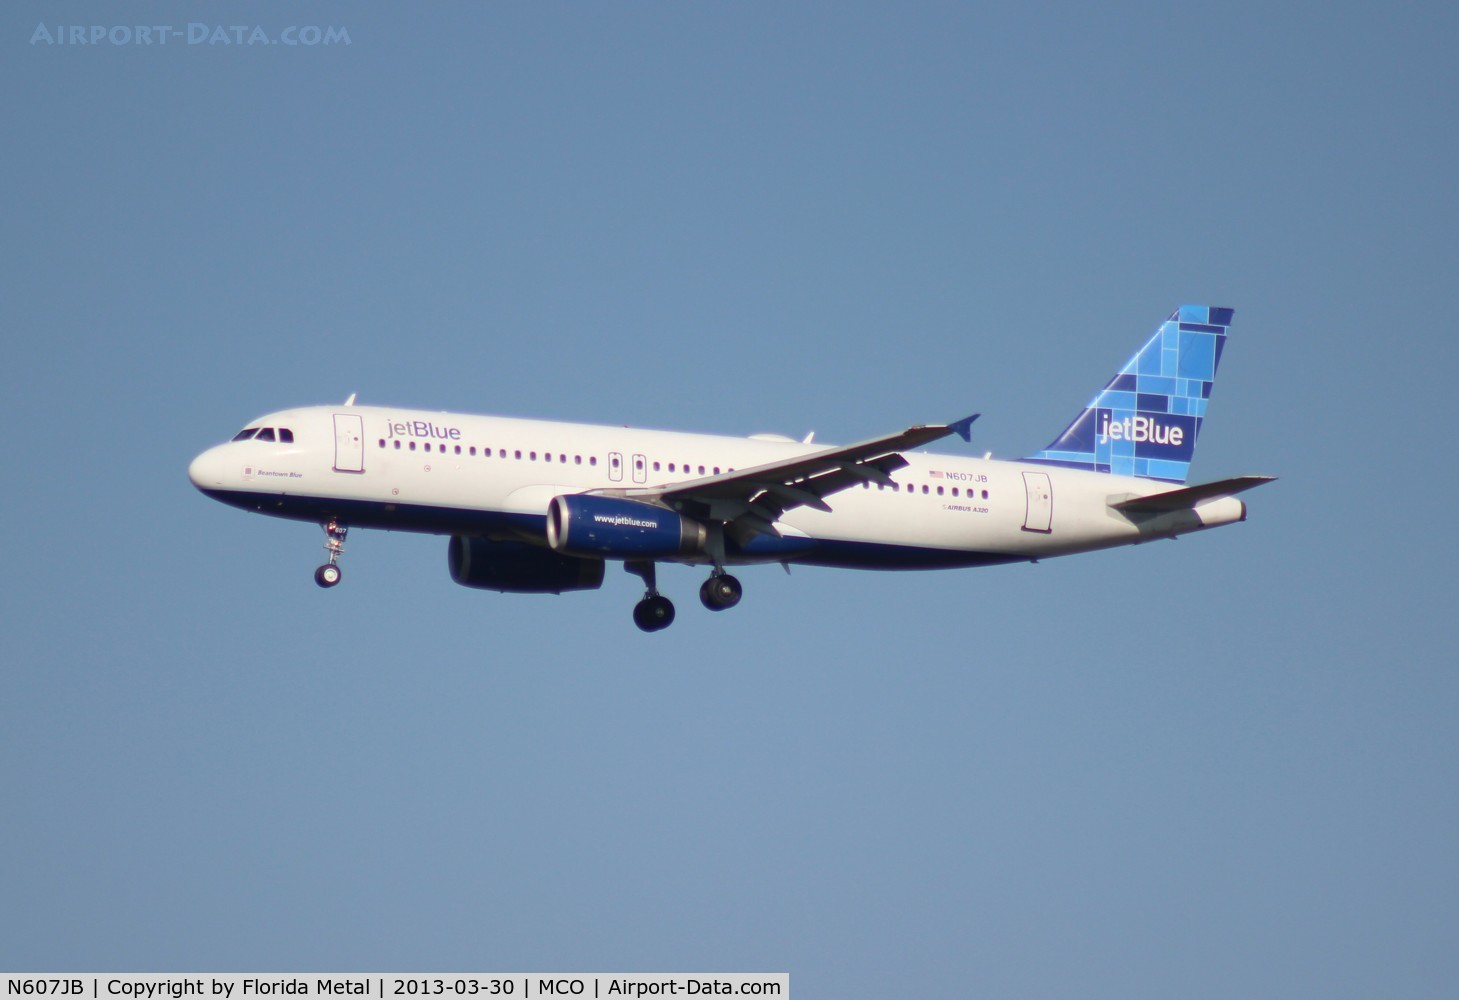 N607JB, 2005 Airbus A320-232 C/N 2386, Jet Blue